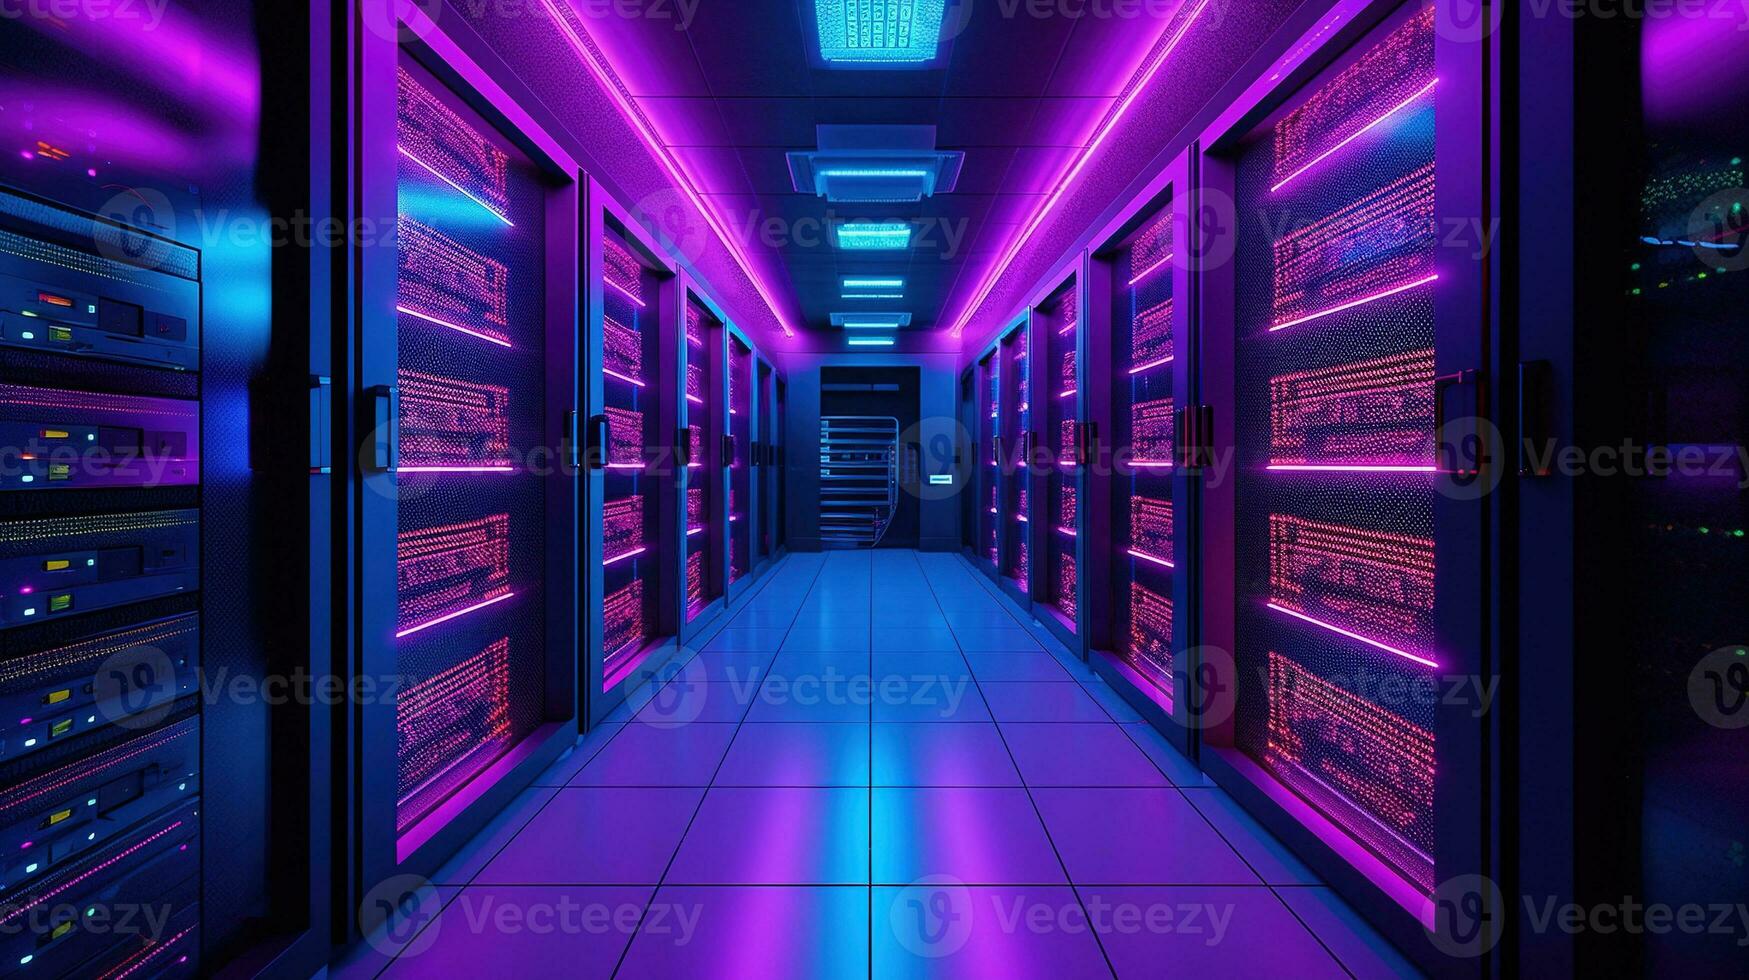 generatief ai, gegevens centrum, modern hoog technologie server kamer in Purper neon kleuren. modern telecommunicatie, wolk computergebruik, kunstmatig intelligentie, databank. foto